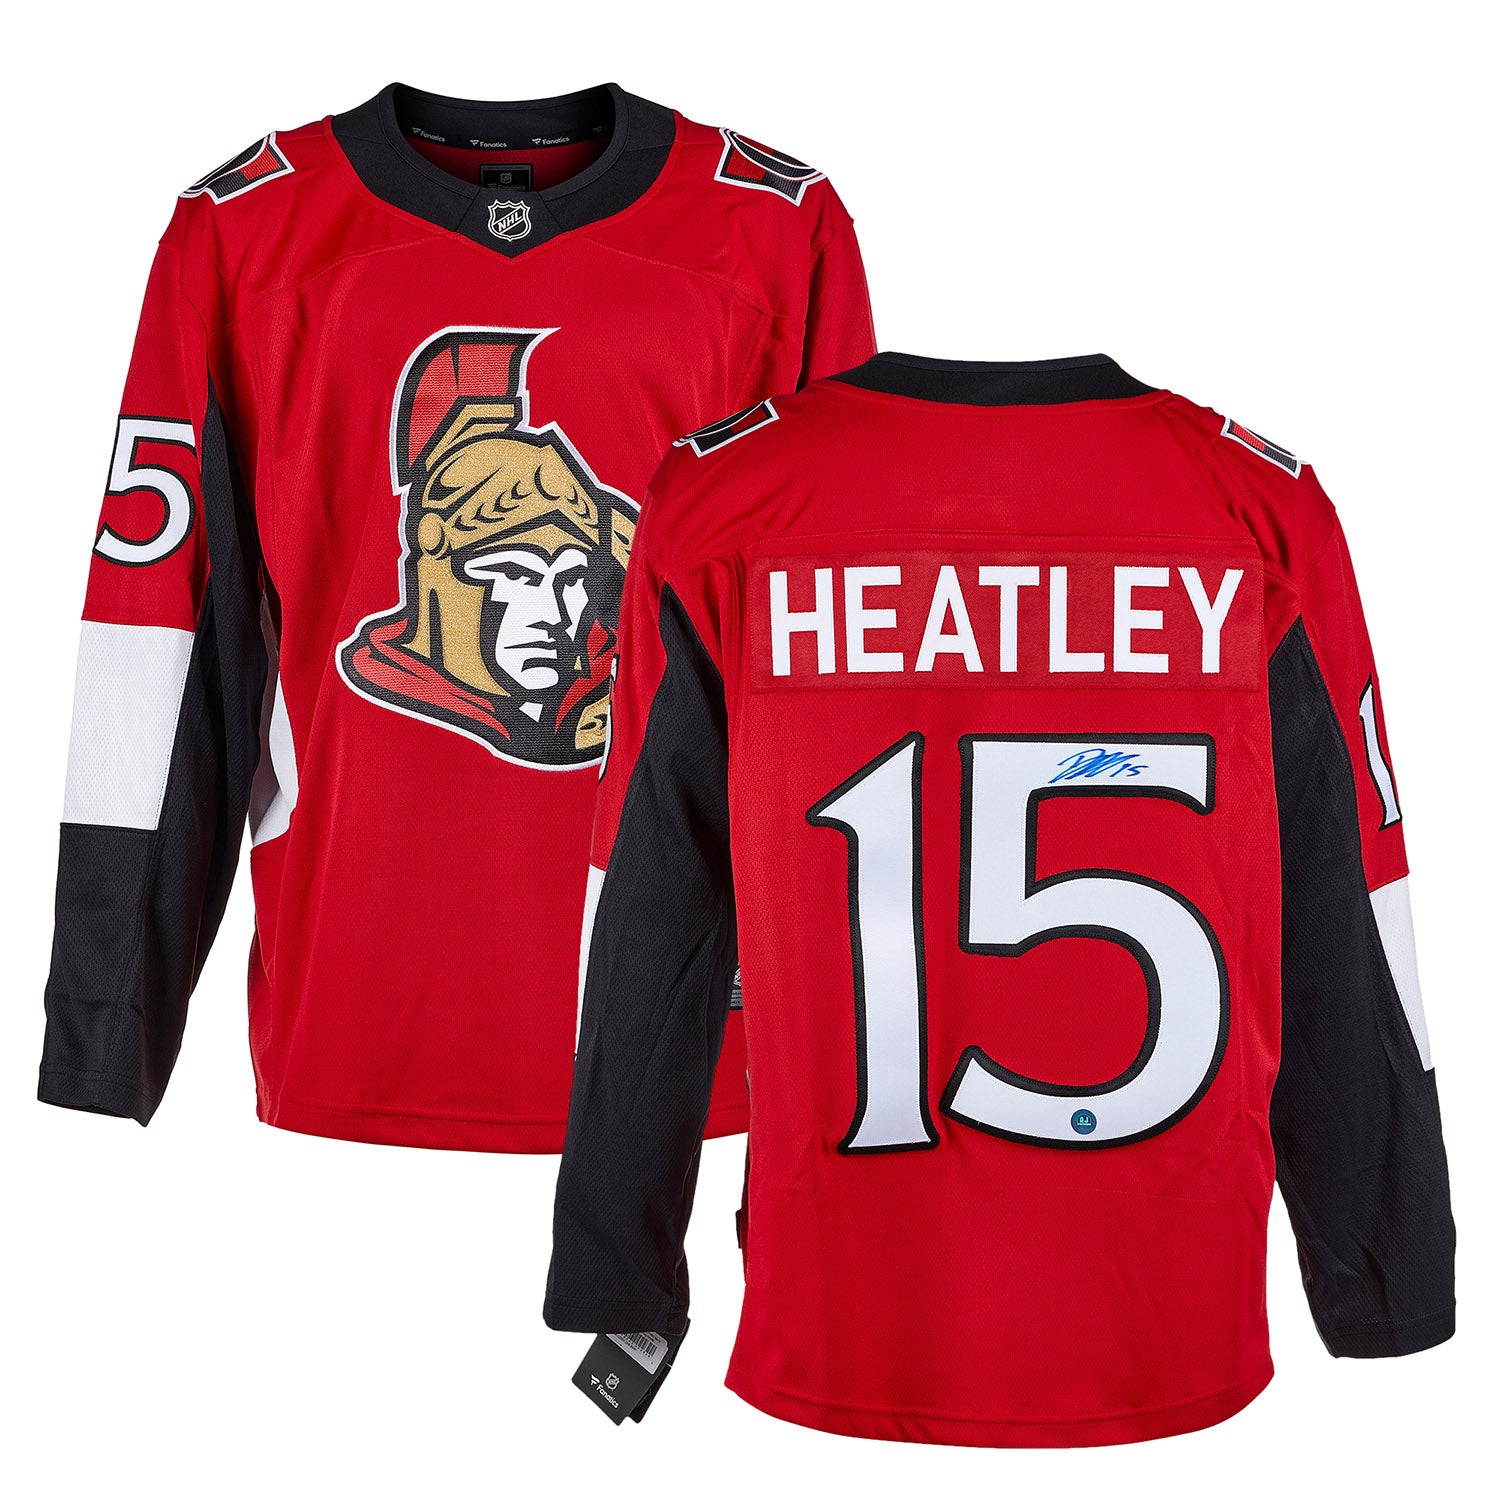 Danny Heatley Ottawa Senators Autographed Fanatics Jersey